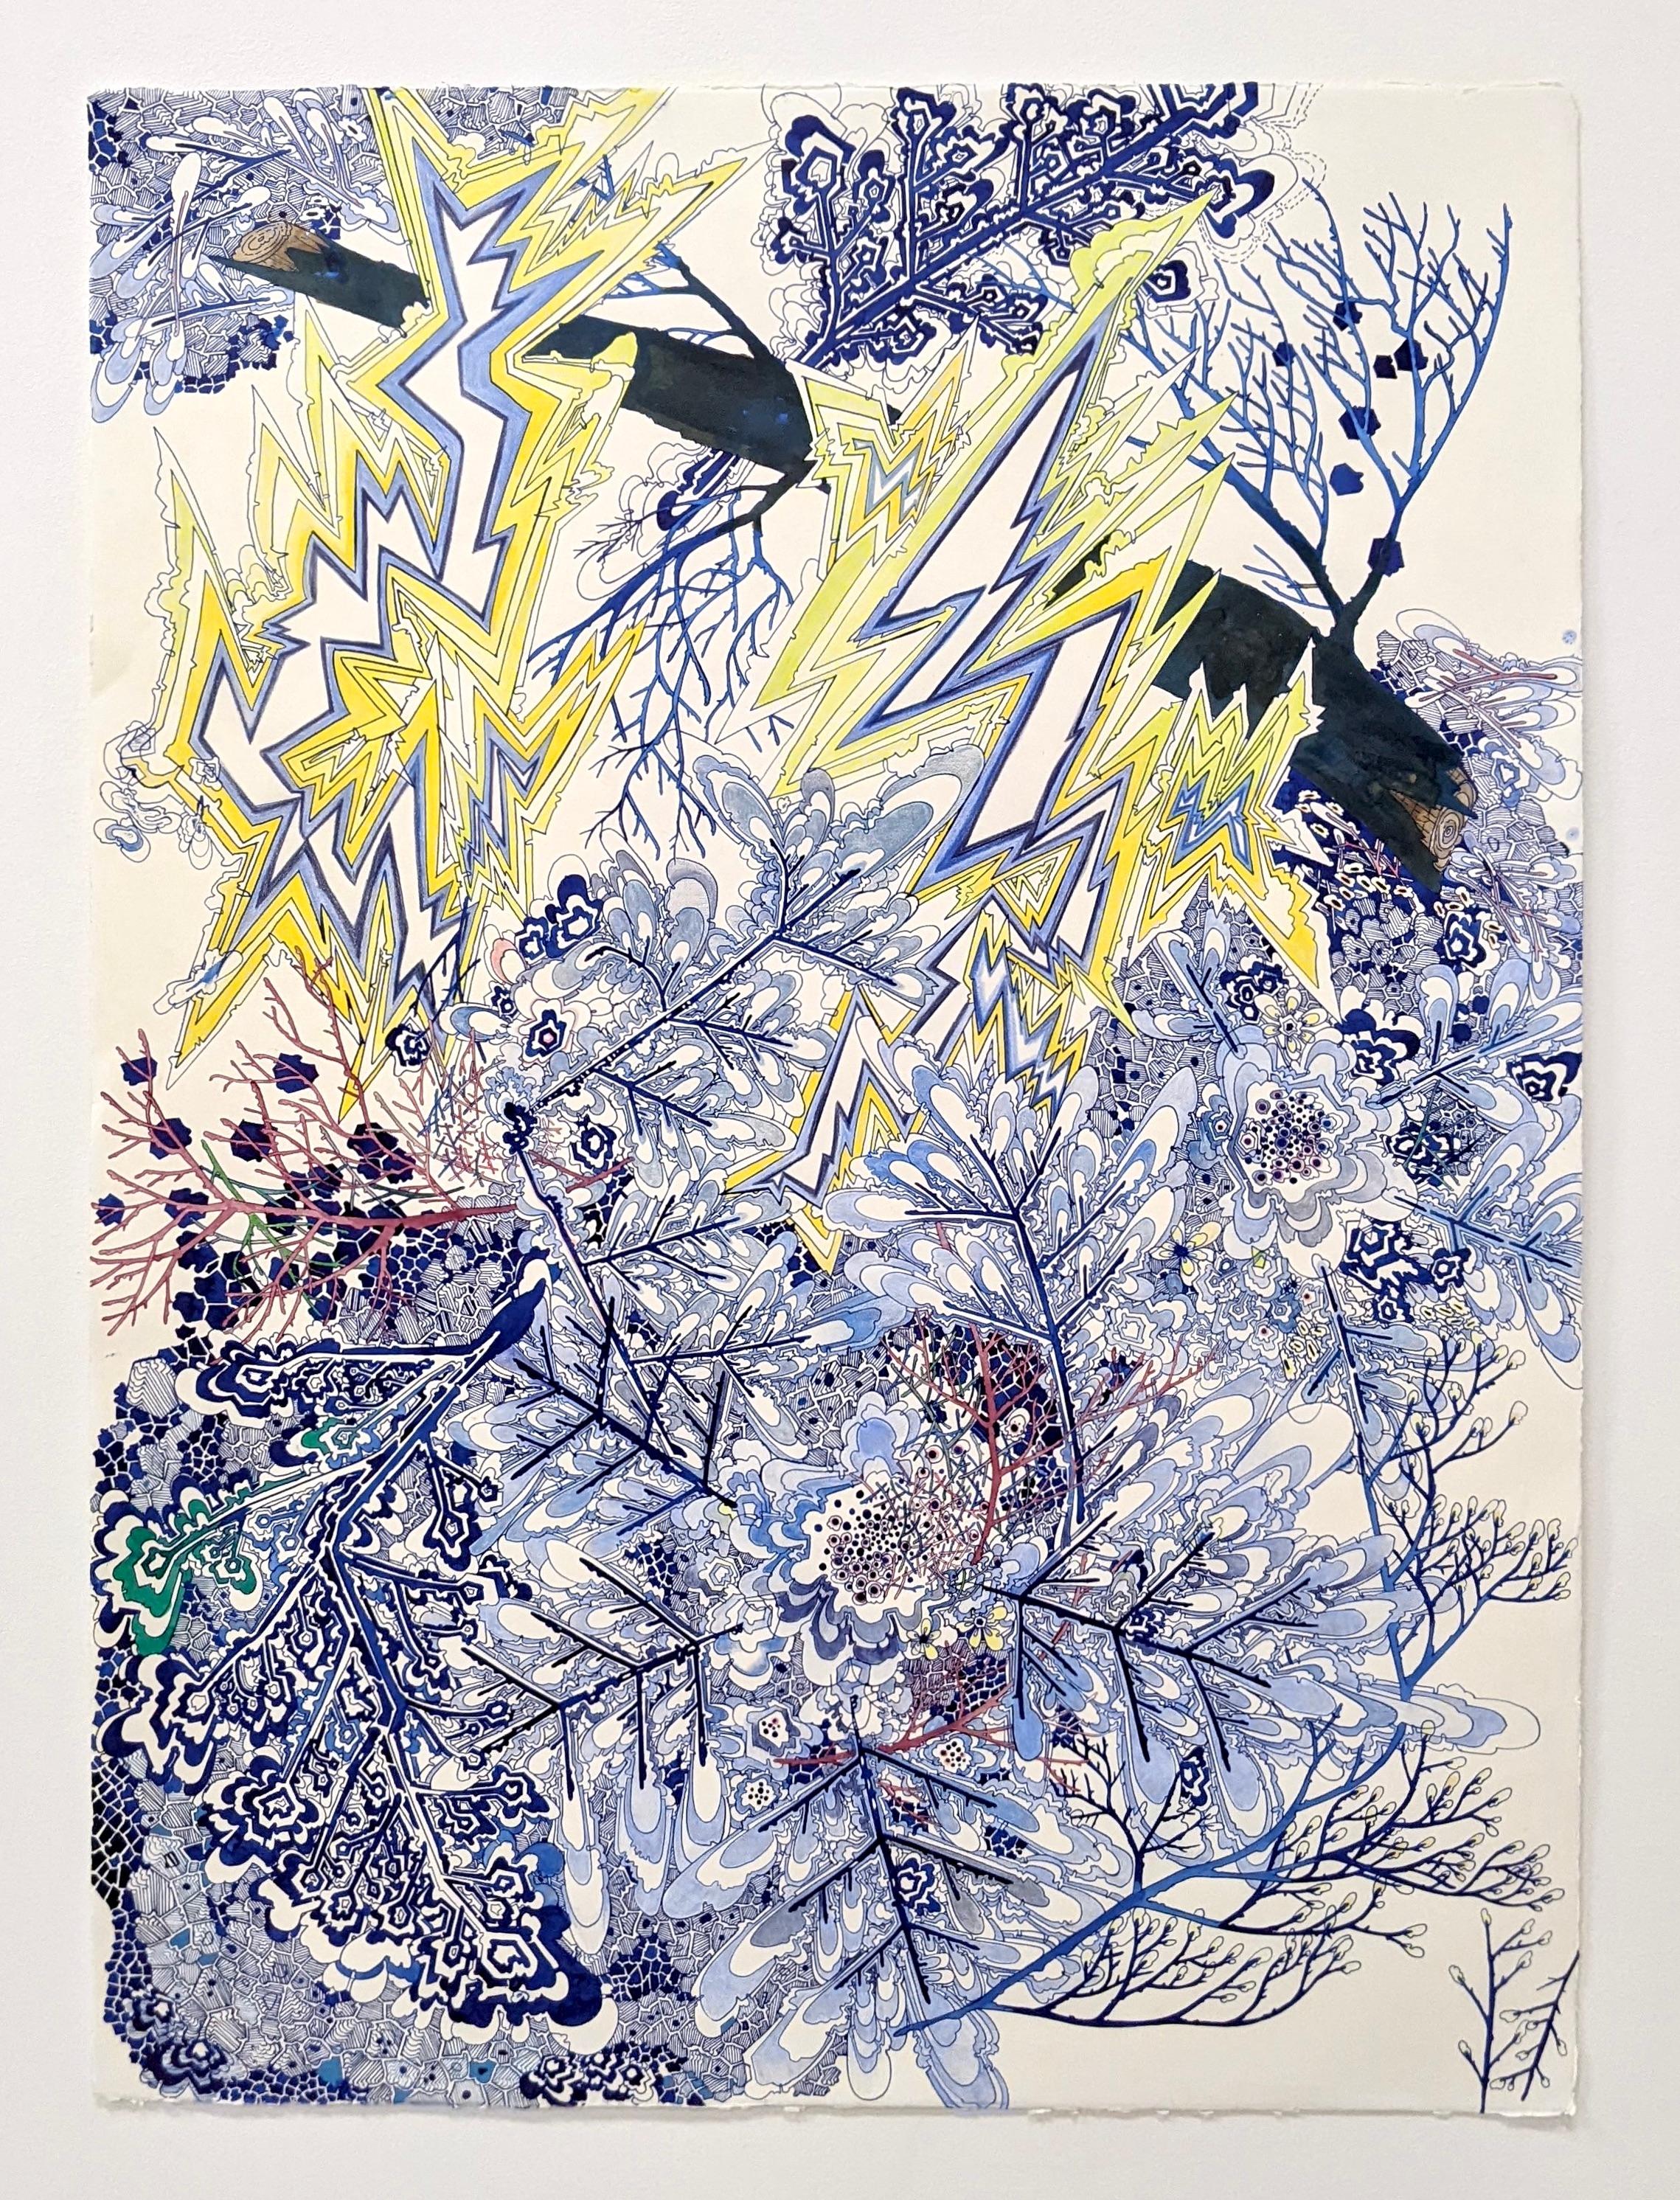 Thunderbolts, Cobalt Blue, Burgundy Mauve, Yellow Lightning, Snowflake, Branches - Art by Sarah Morejohn